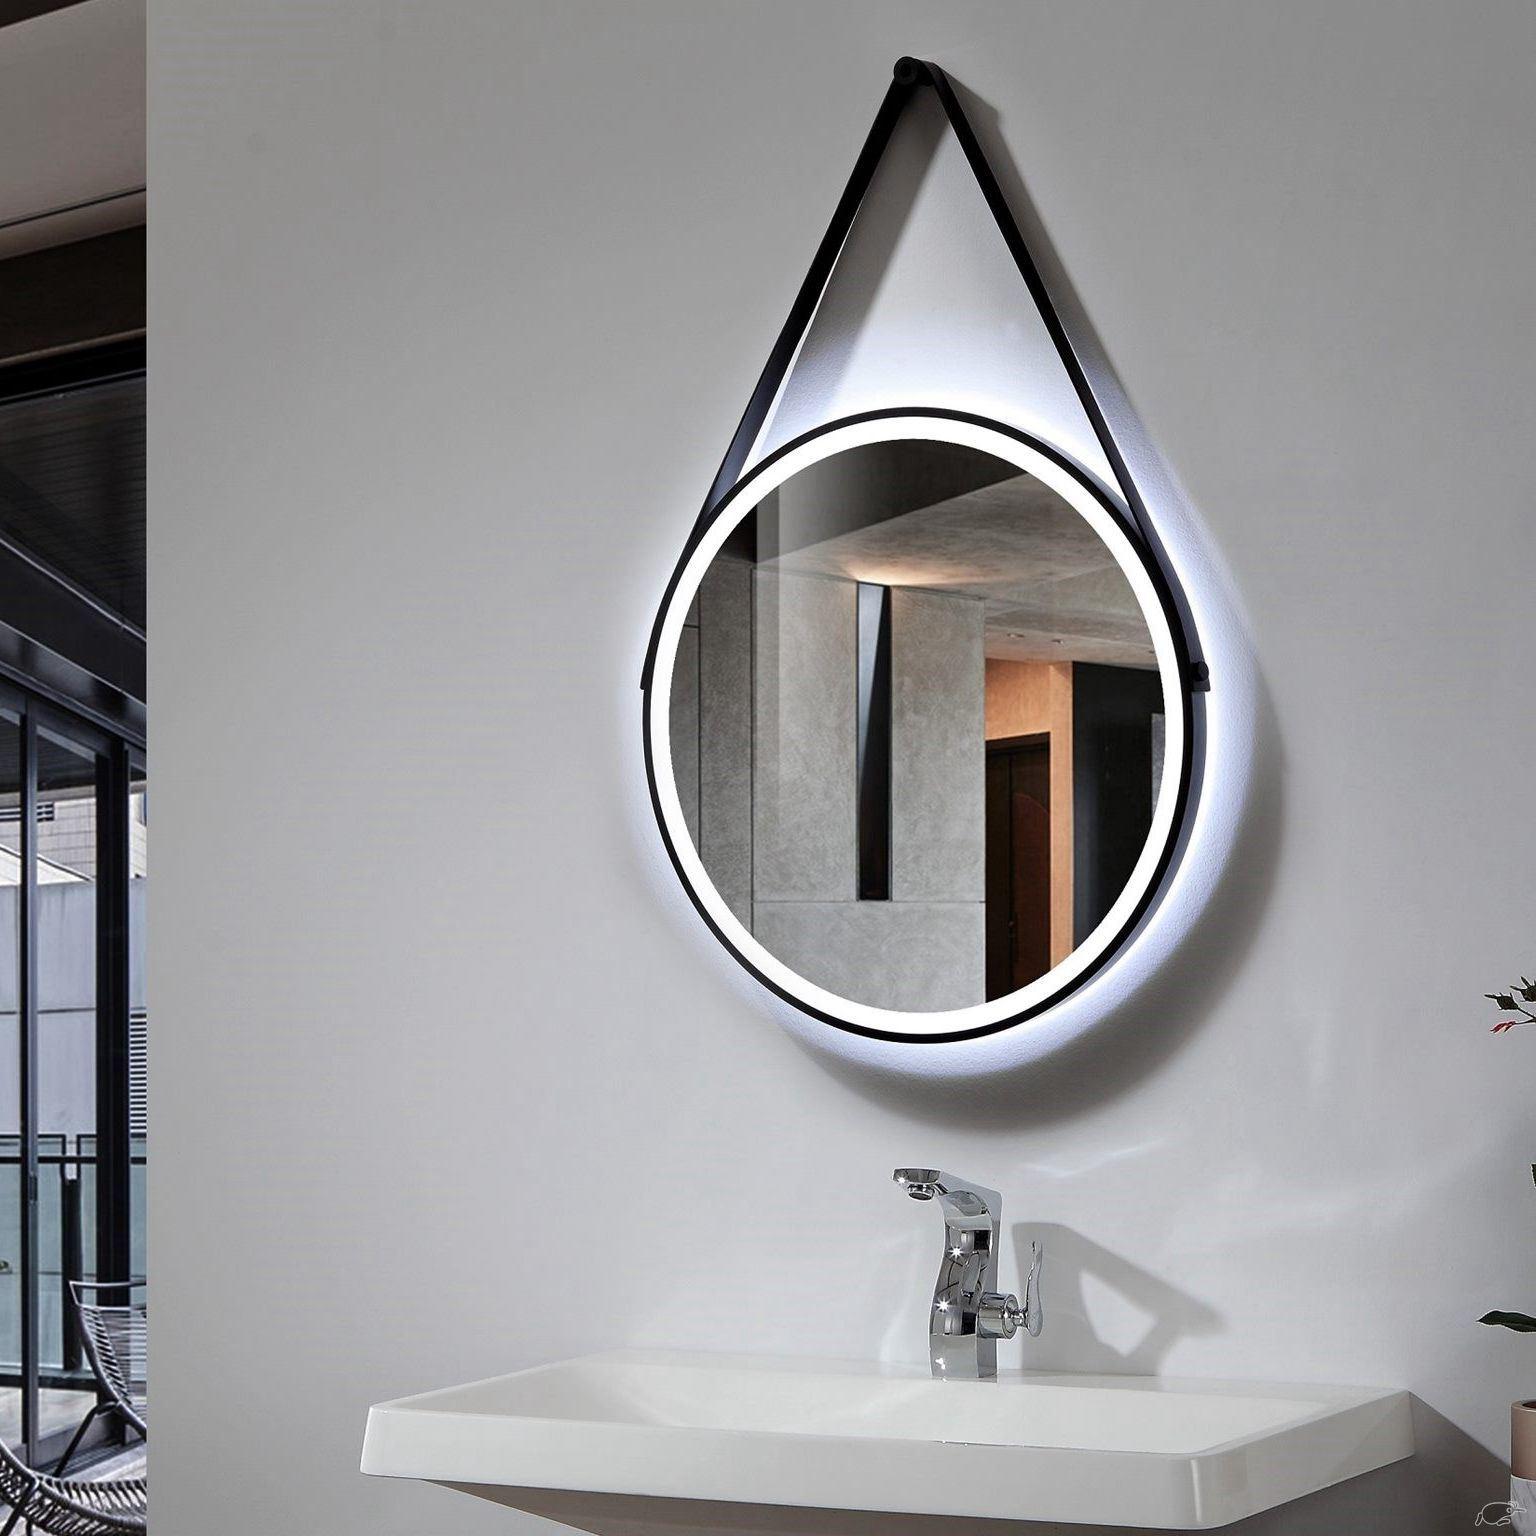 Round Iron Aluminum Framed Bathroom Wall Mounted LED Mirror